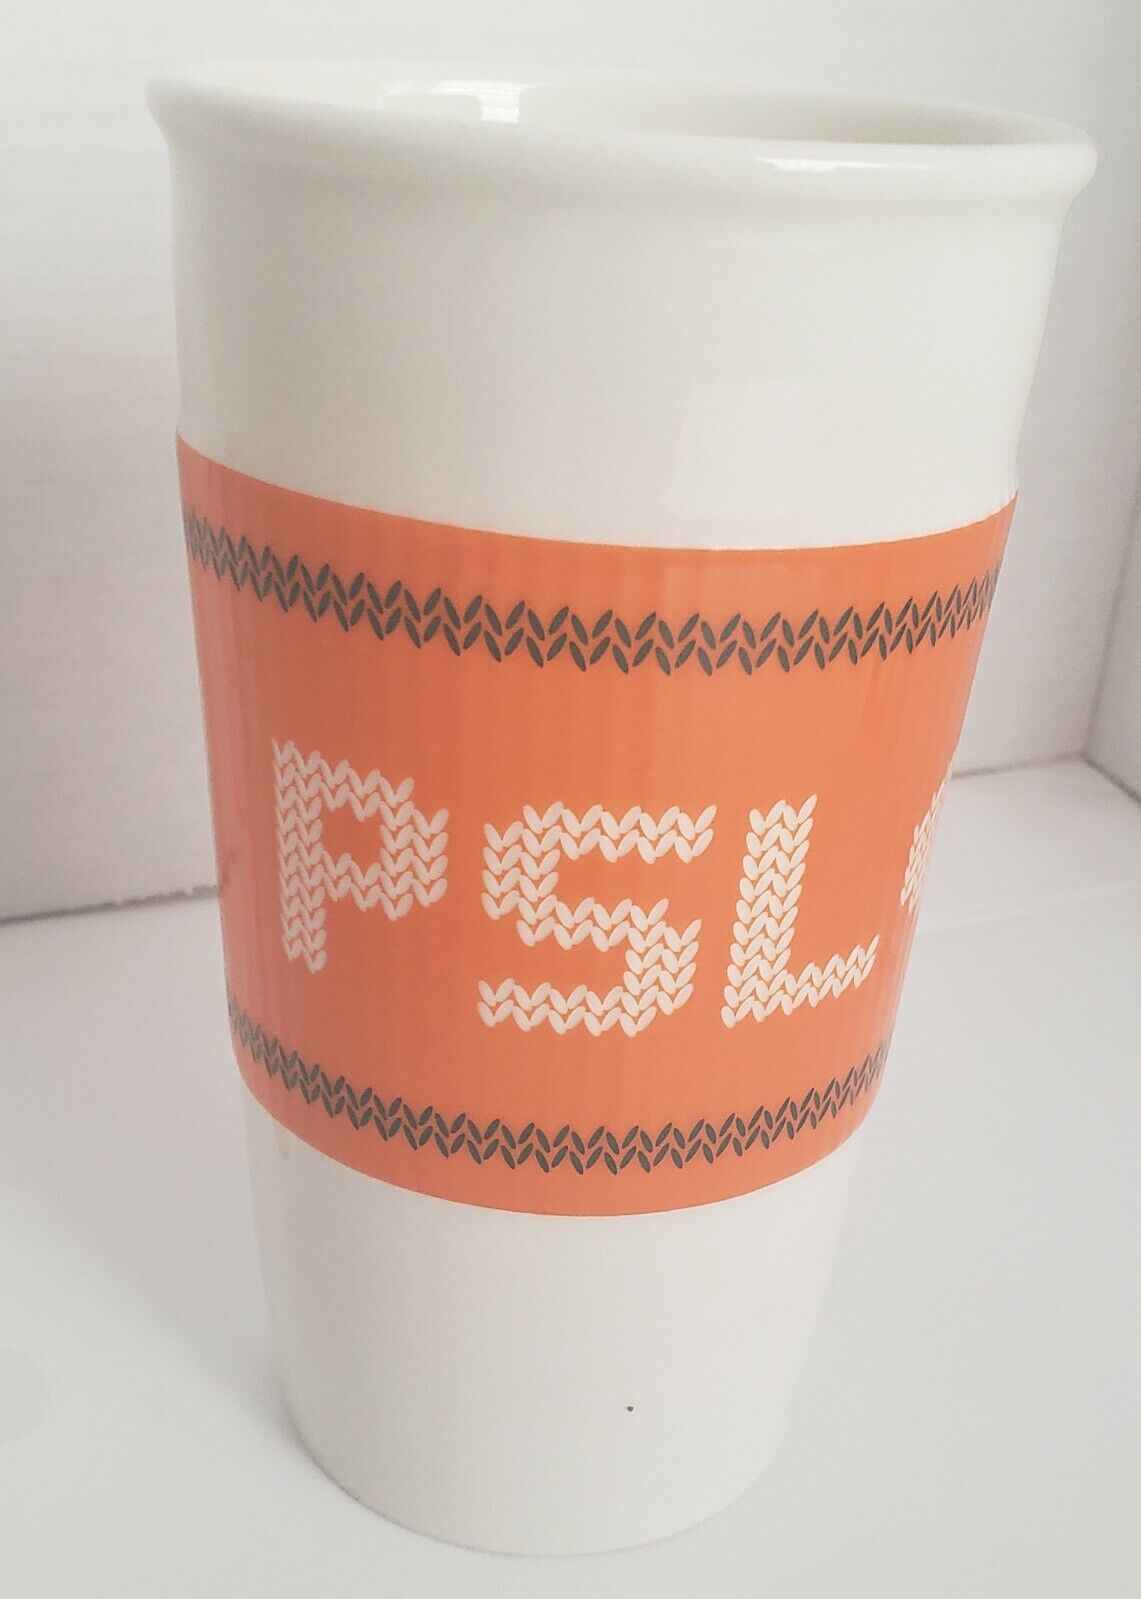 Starbucks Team PSL (Pumpkin Spice Latte) Ceramic Tumbler No Lid 10 oz 2016 